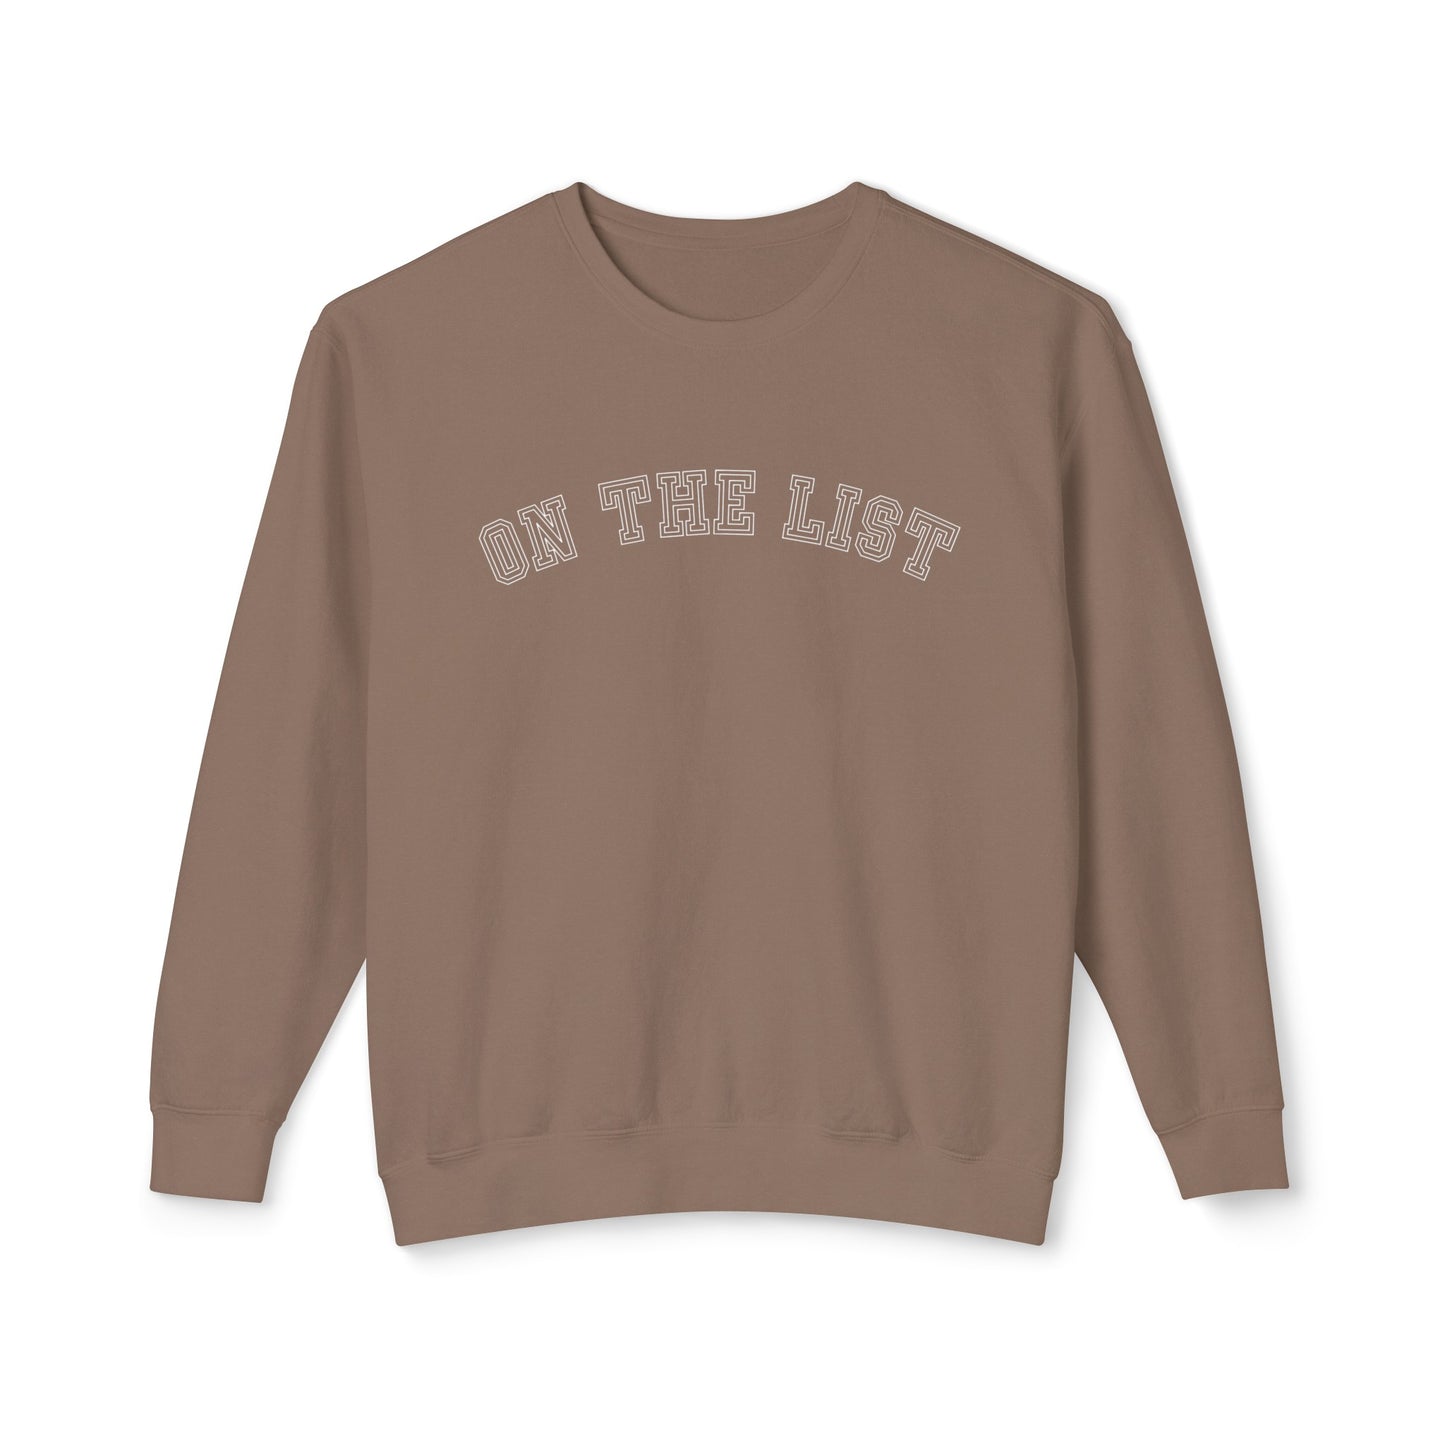 Eddy and Rita Women's Comfort Colors Lightweight Sweatshirt - "On the List" Trendy Graphic Pullover